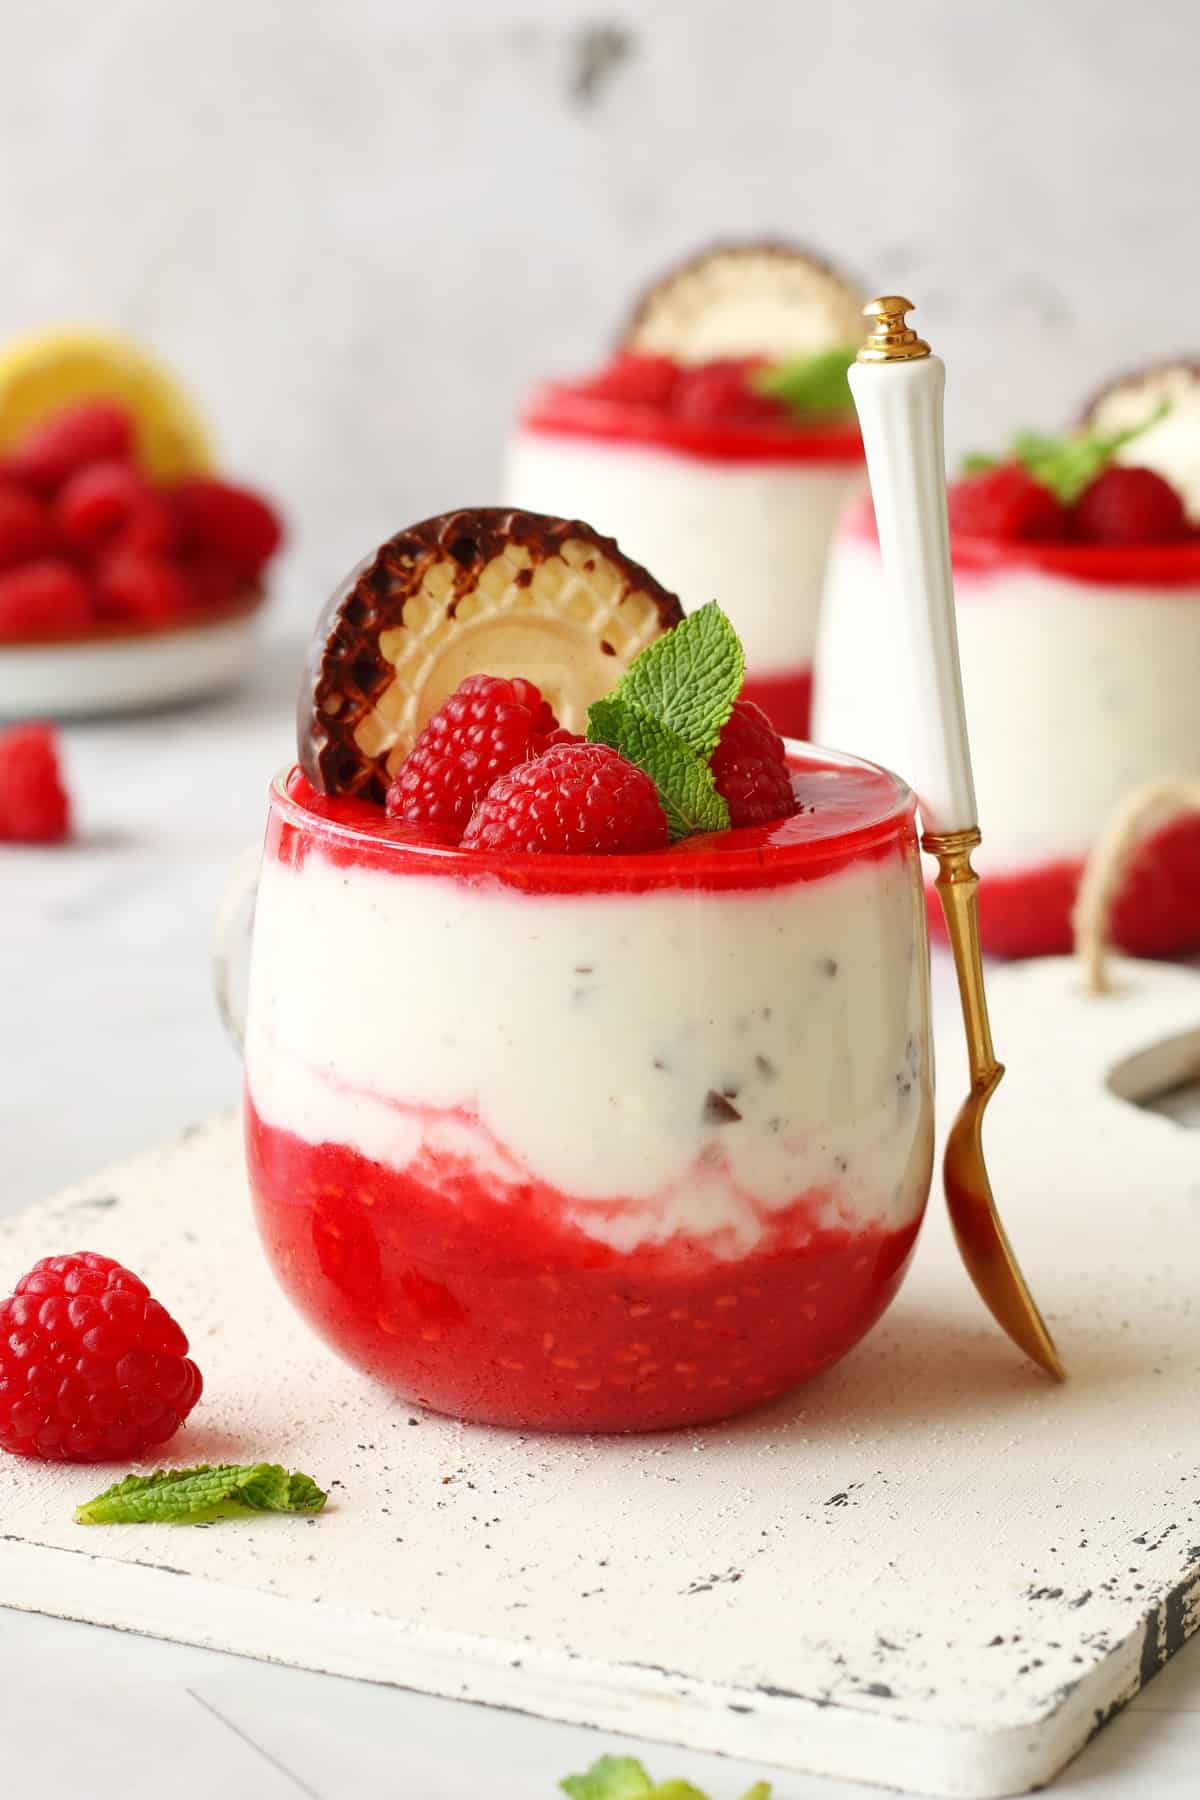 A glass of Dickmann's dessert with raspberries.